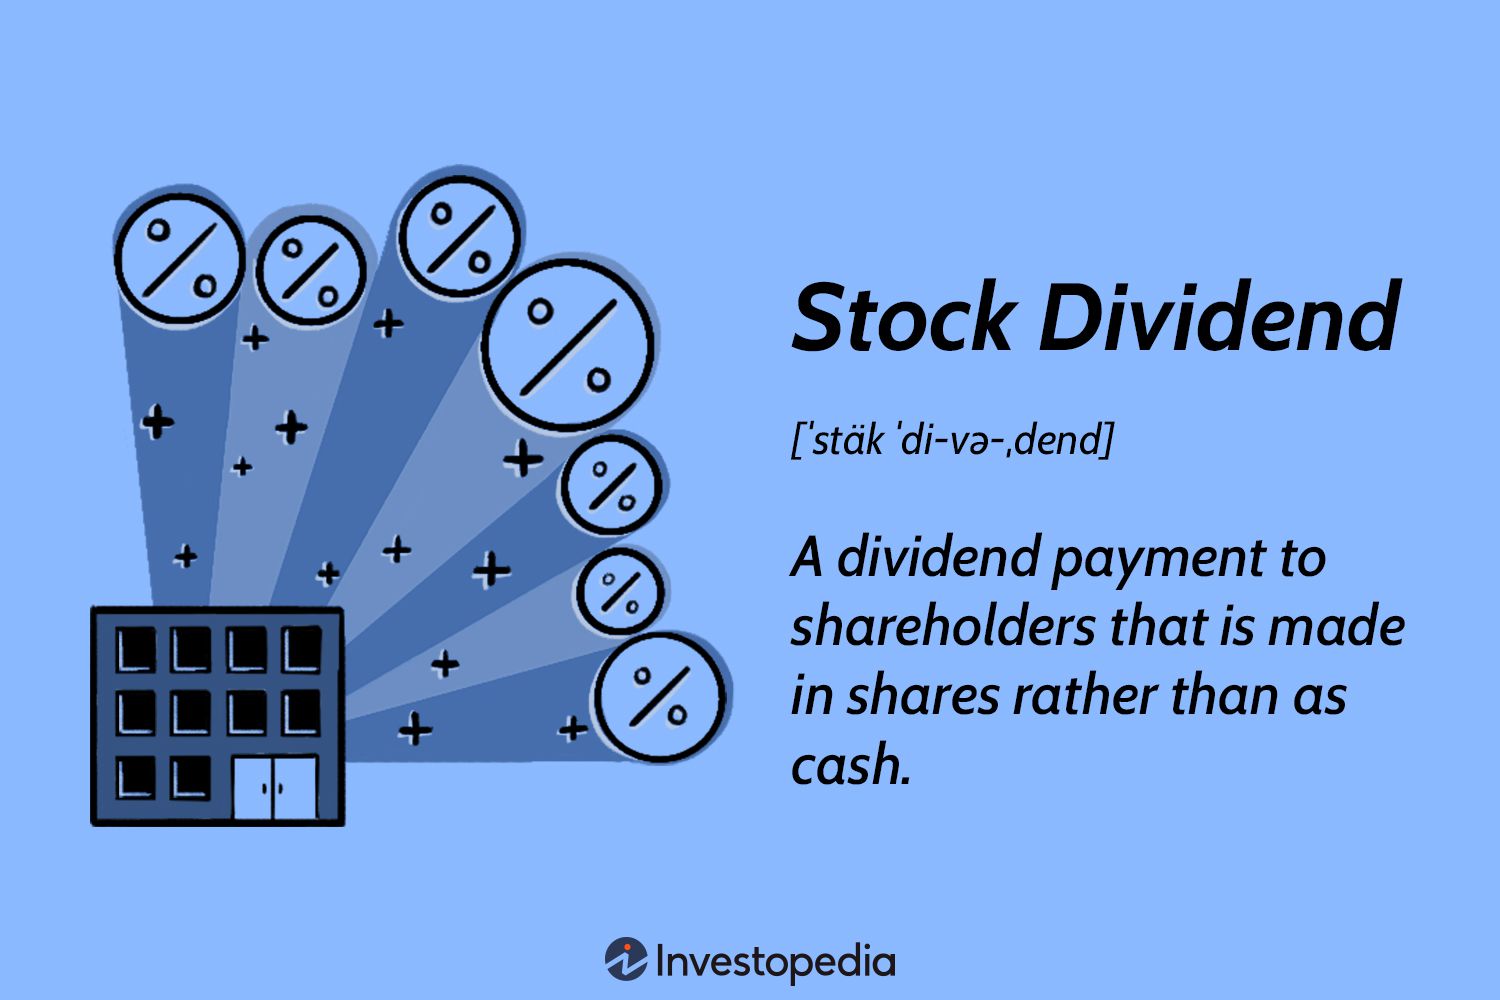 Description of stock dividend